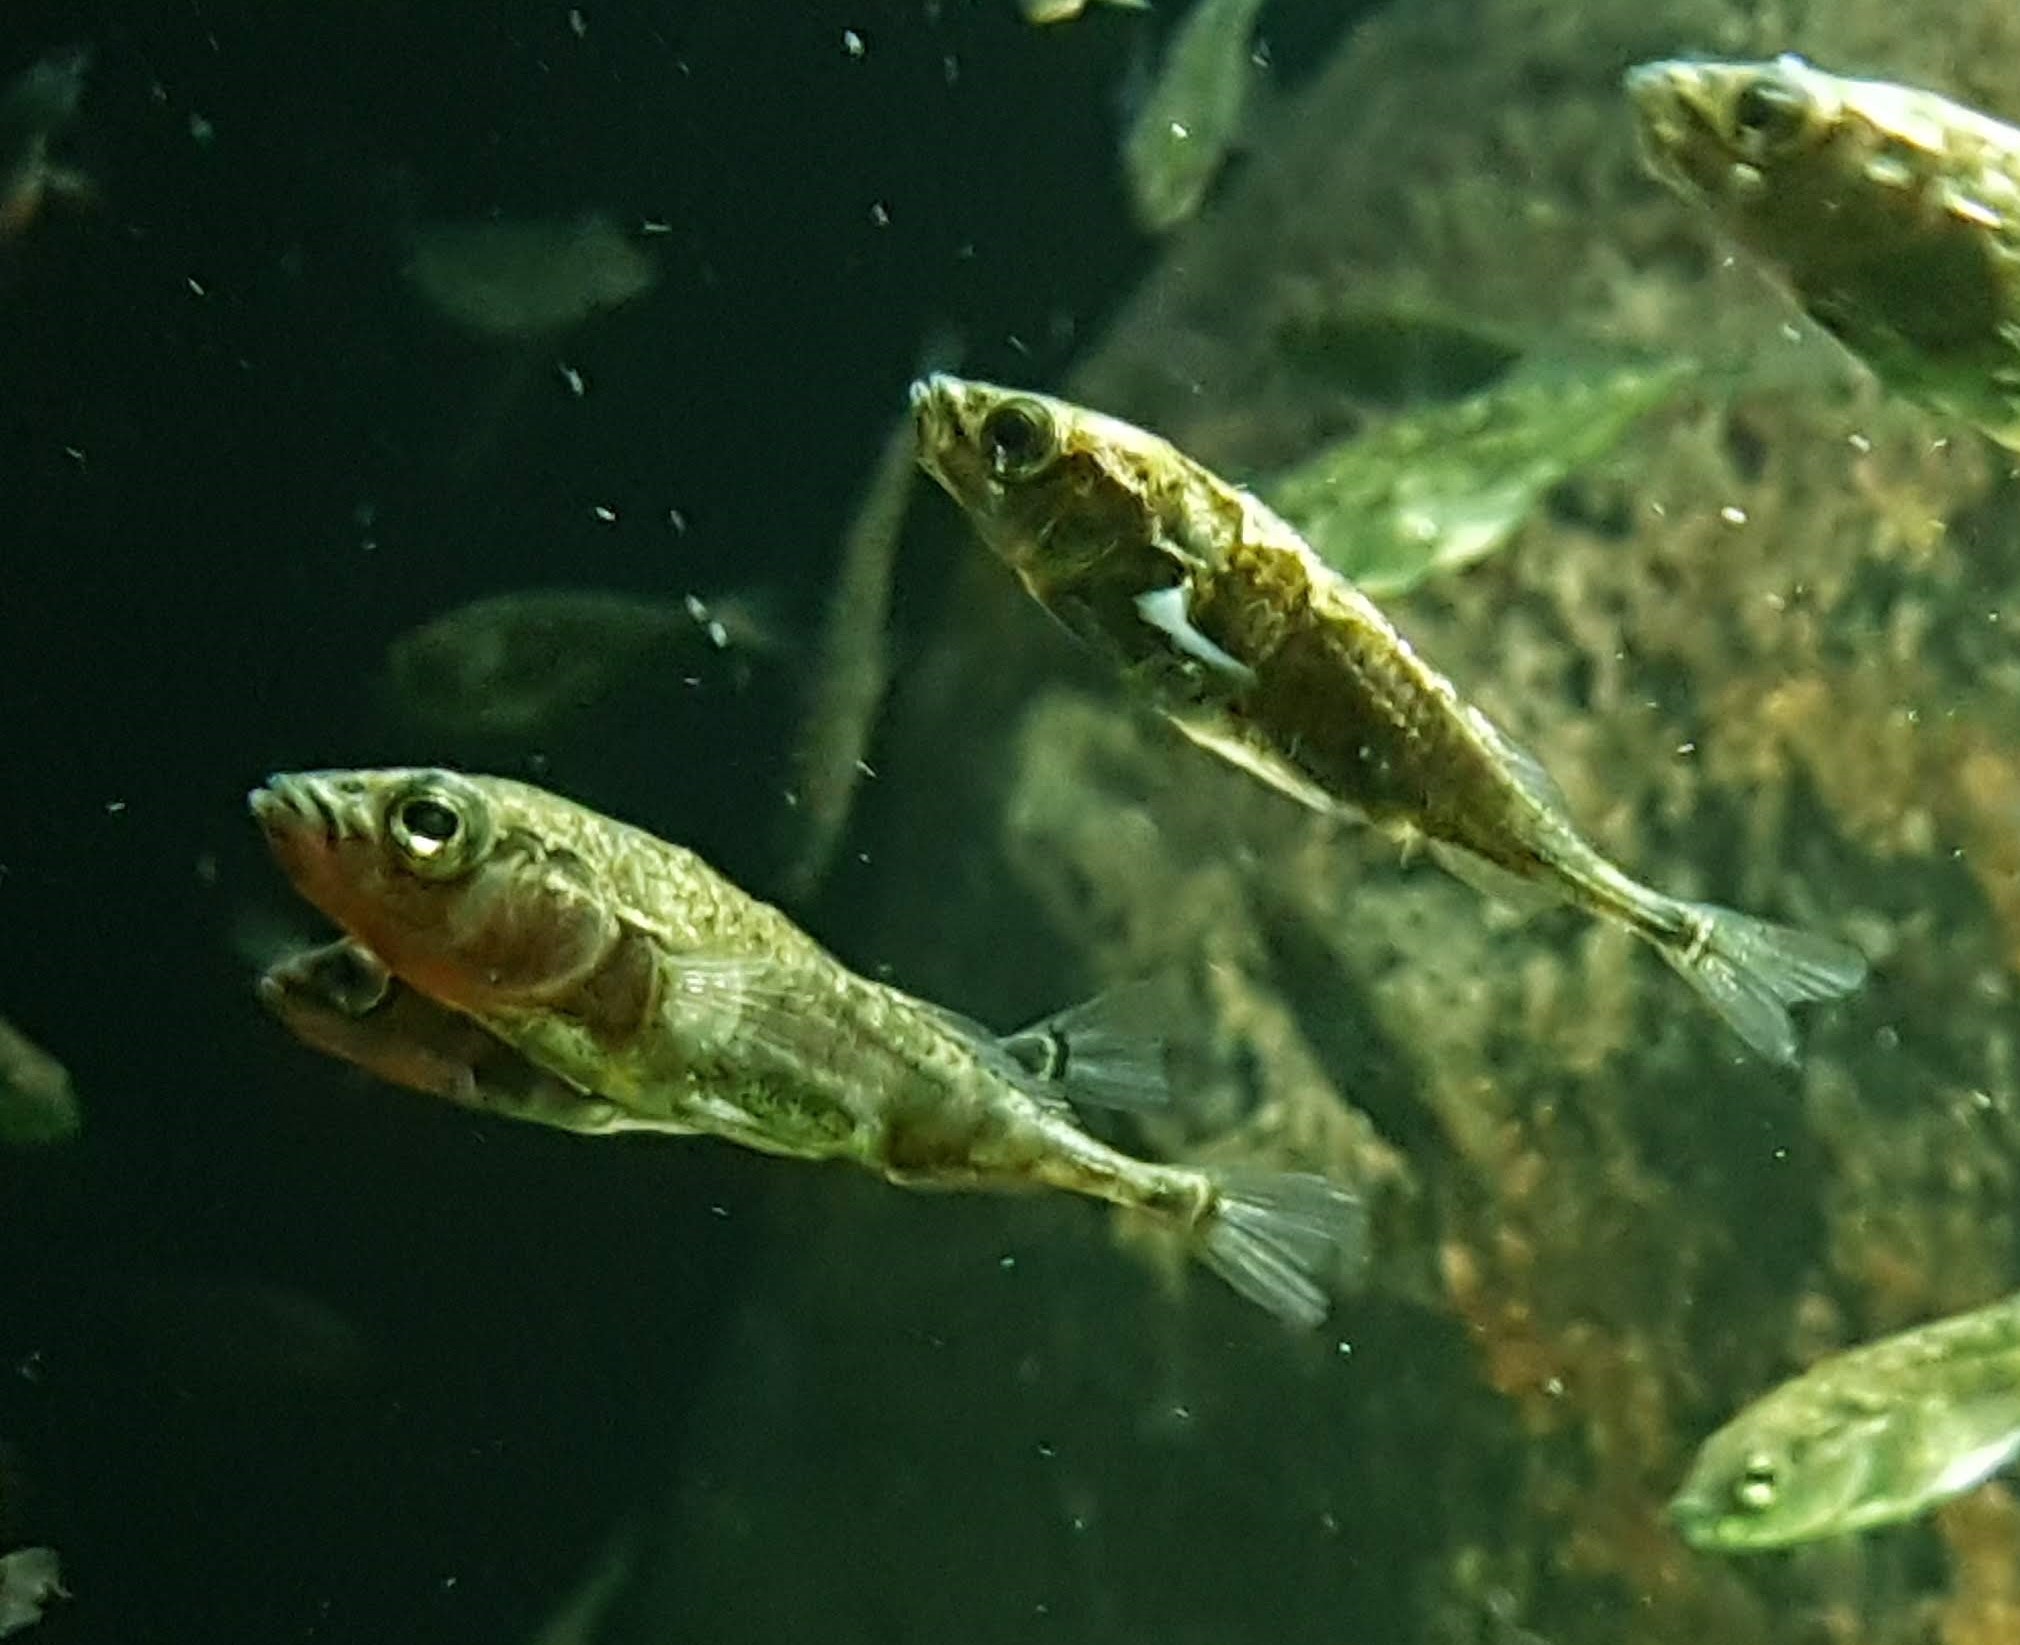 Three spined stickleback fish swimming